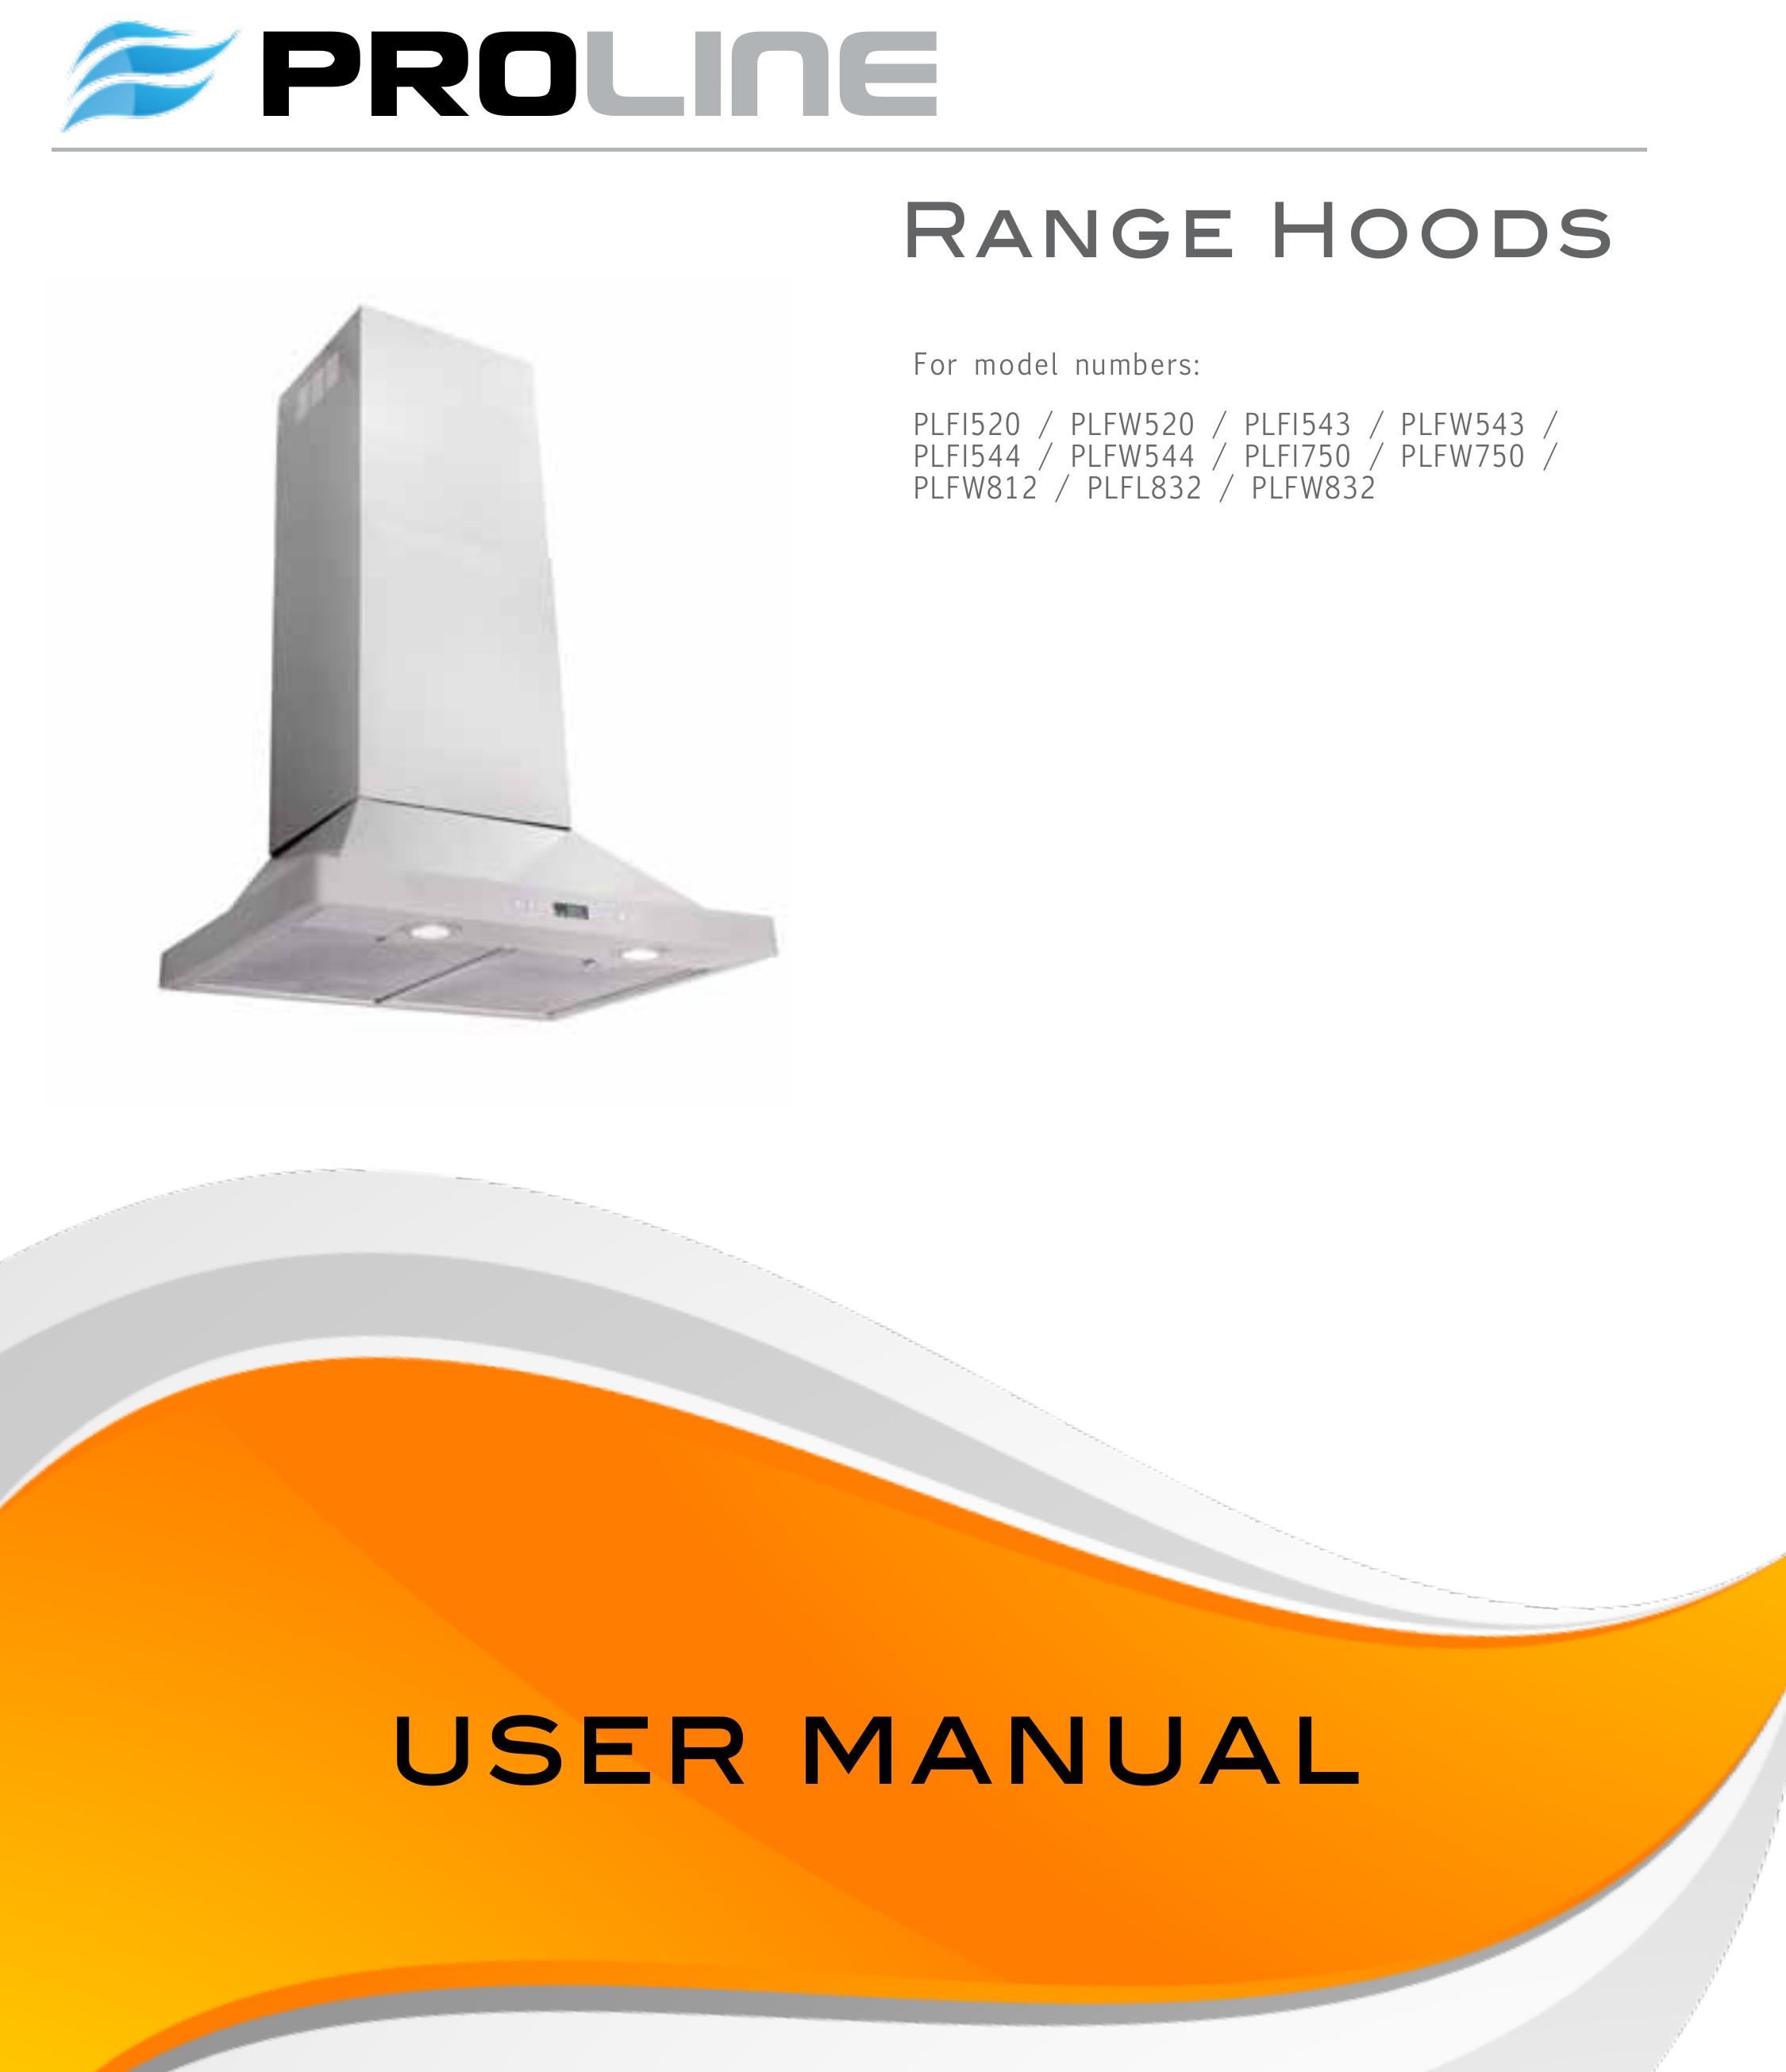 Proline PLFL832 Ventilation Hood User Manual